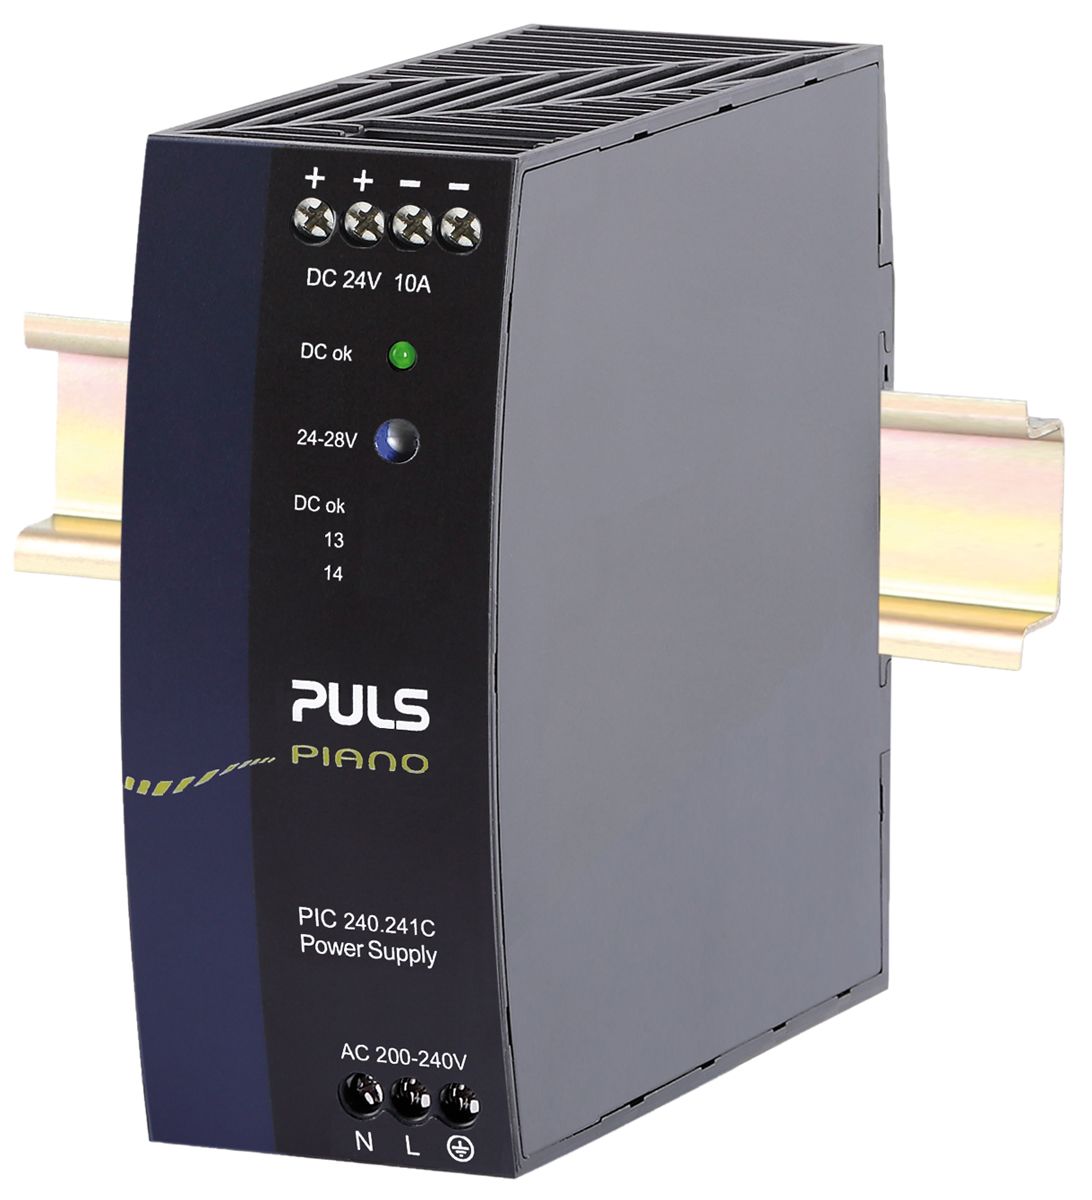 PULS PIANO Switch Mode DIN Rail Power Supply, 230V ac, 24V dc dc Output, 10A Output, 240W